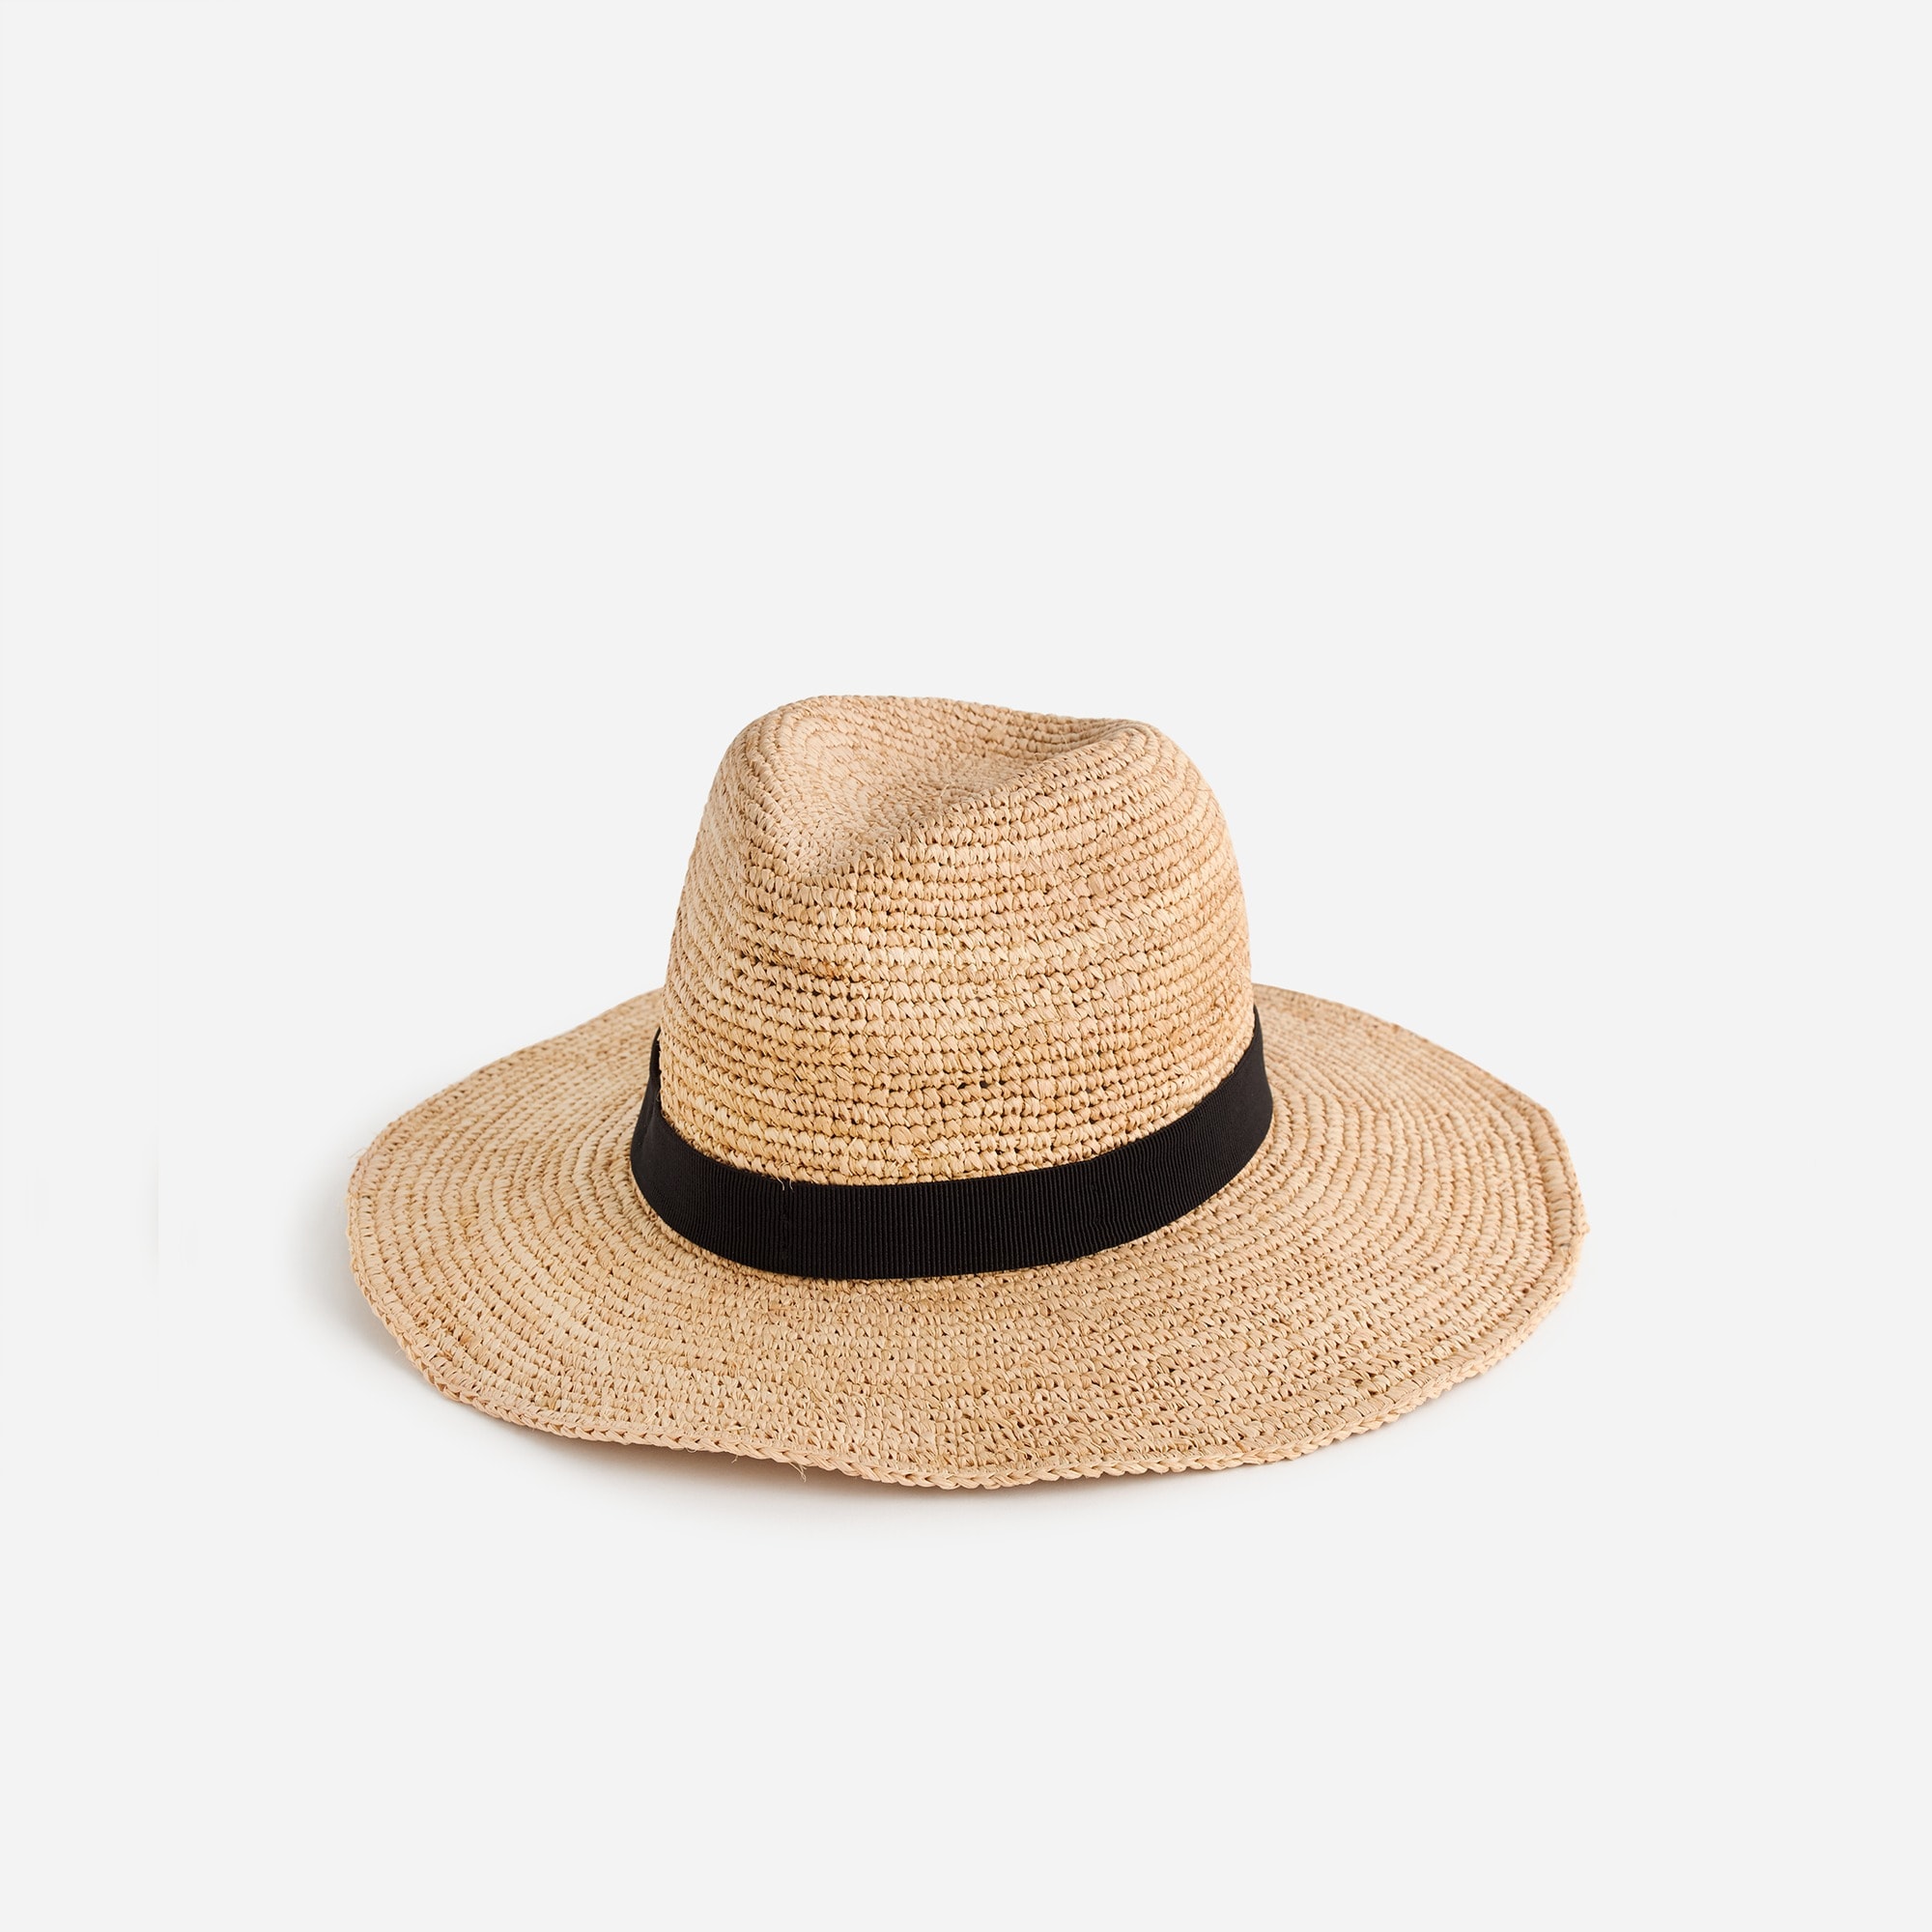 JCHTYULD Womens Bucket Hat Cotton Packable Adjustable India